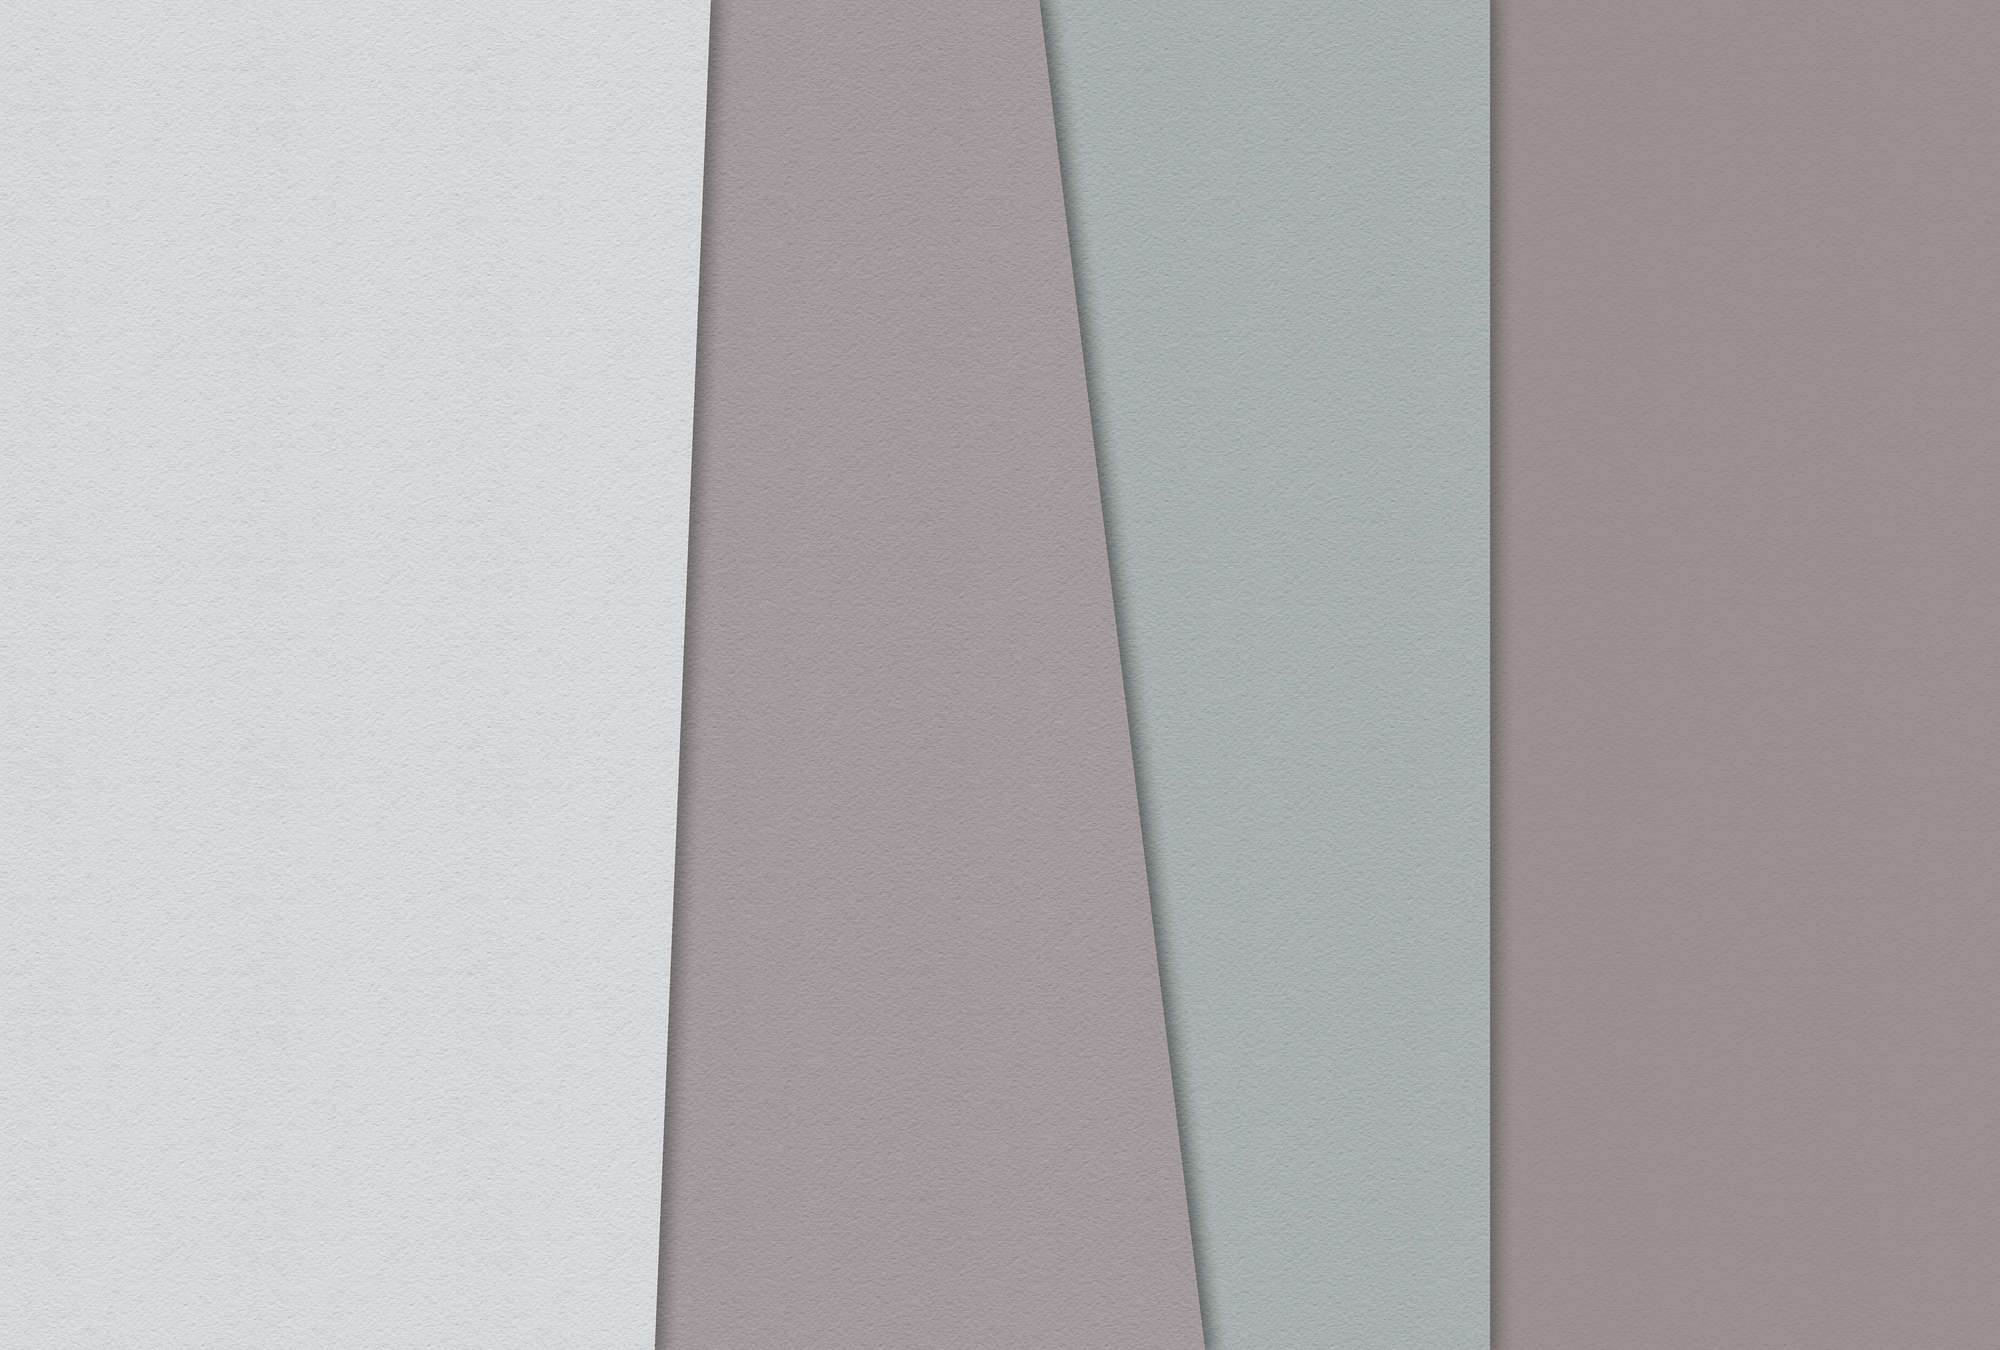             Layered paper 3 - Minimalistische Fototapete Farbfelder-Büttenpapier Struktur – Blau, Creme | Perlmutt Glattvlies
        